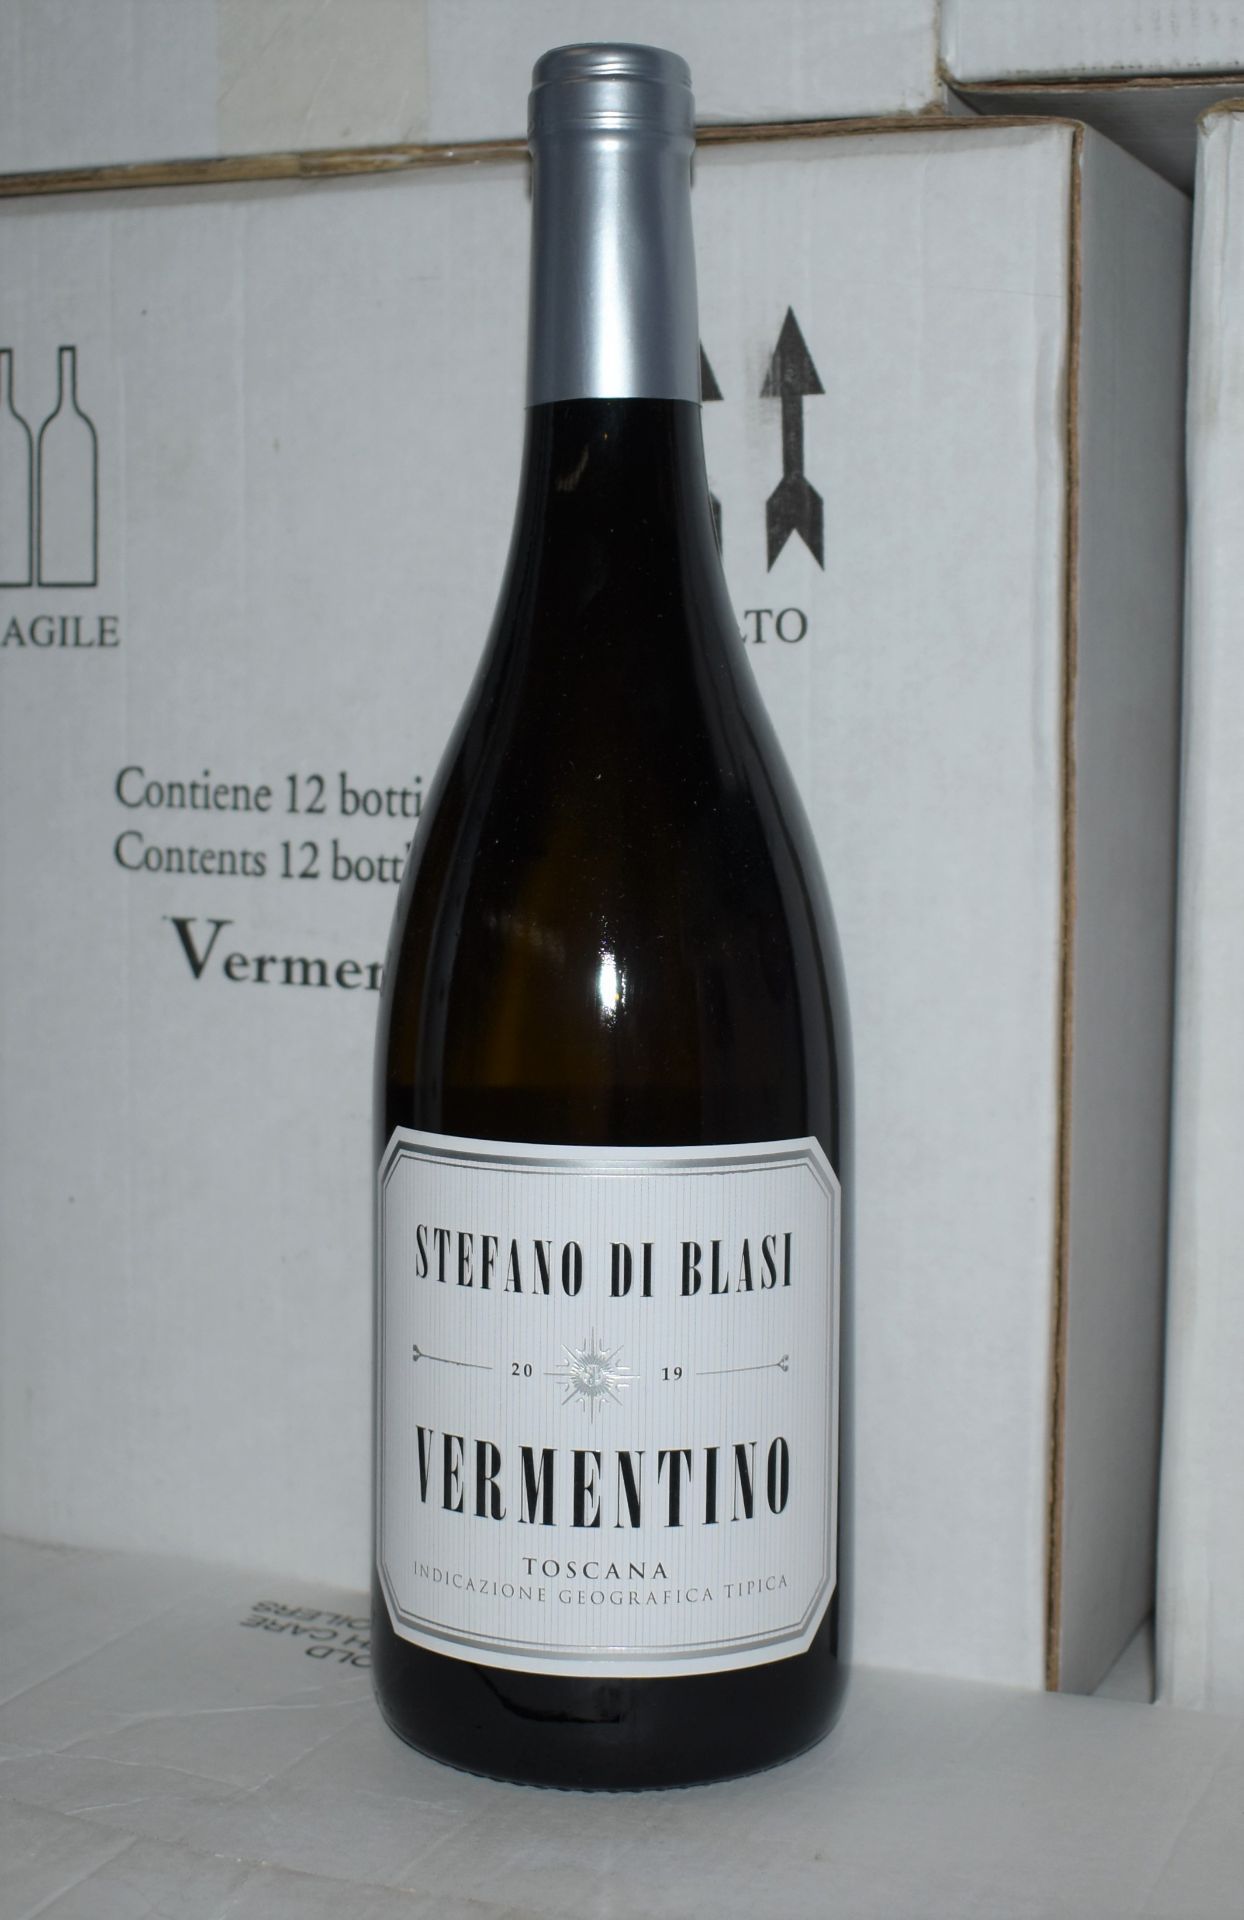 12 x Bottles of Stefano Di Blasi 2019 Vermentino Toscana 13.5% Wine - 750ml Bottles - Drink Until - Image 7 of 7